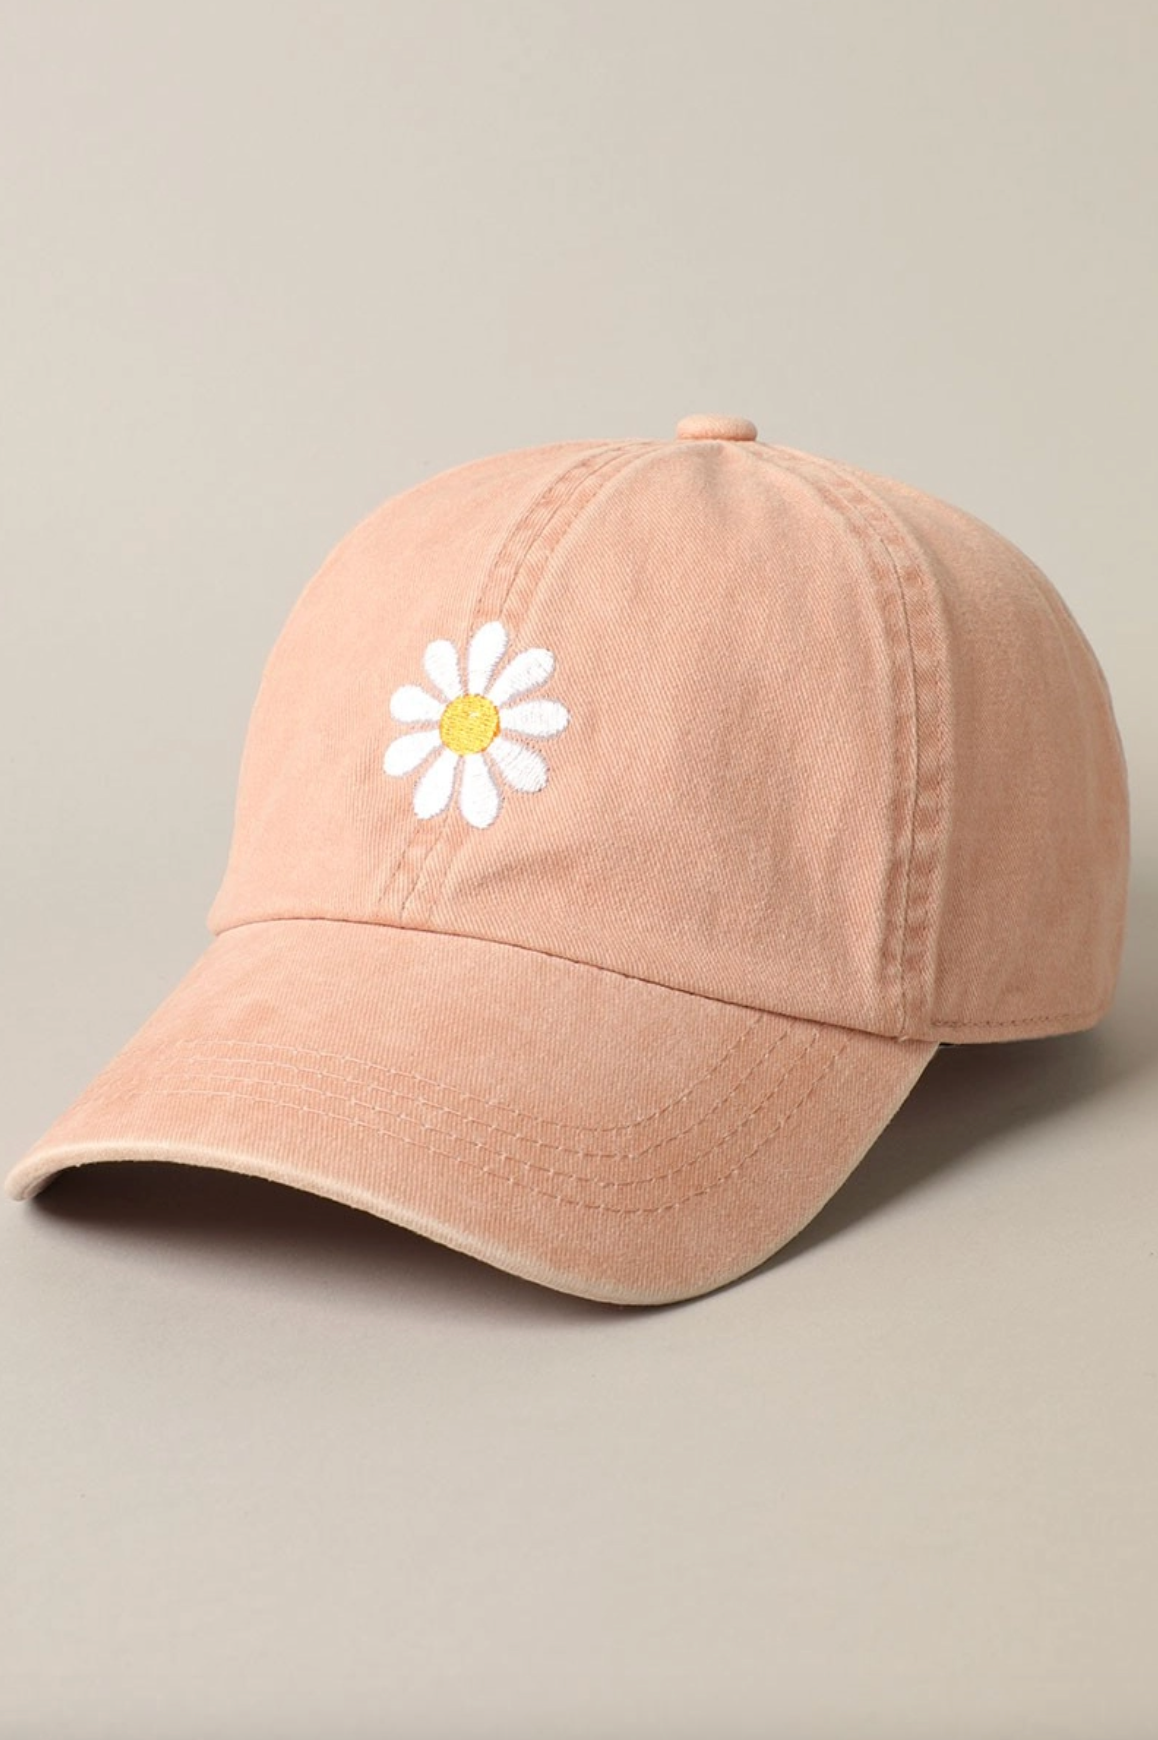 Daisy Embroidery Adjustable Baseball Cap Hat